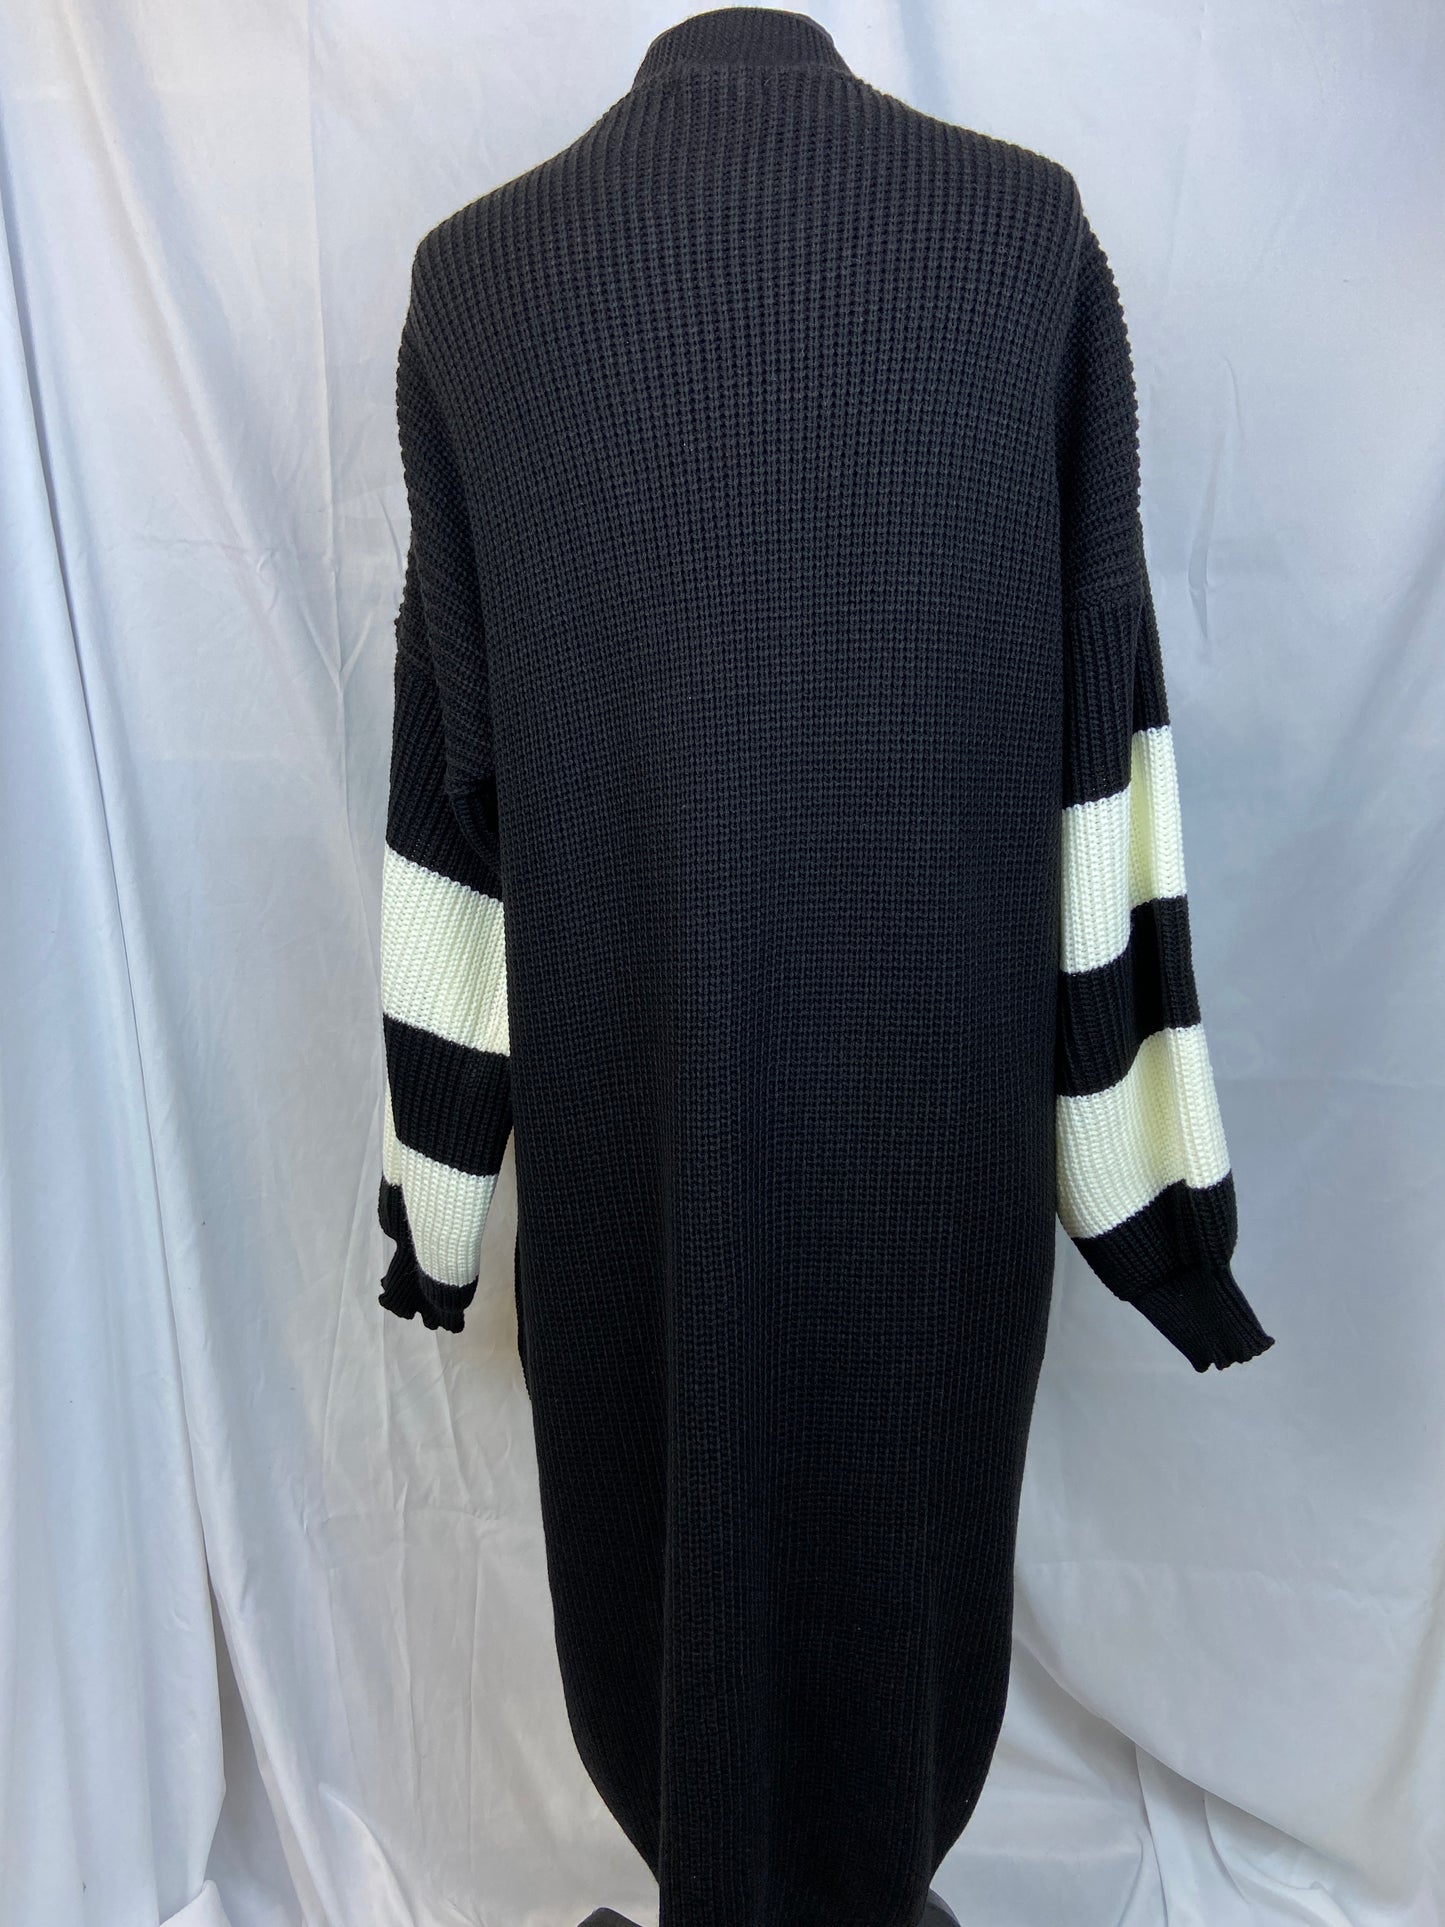 Boohoo Plus Size 20 Black and White Oversized Cardigan Sweater NWT